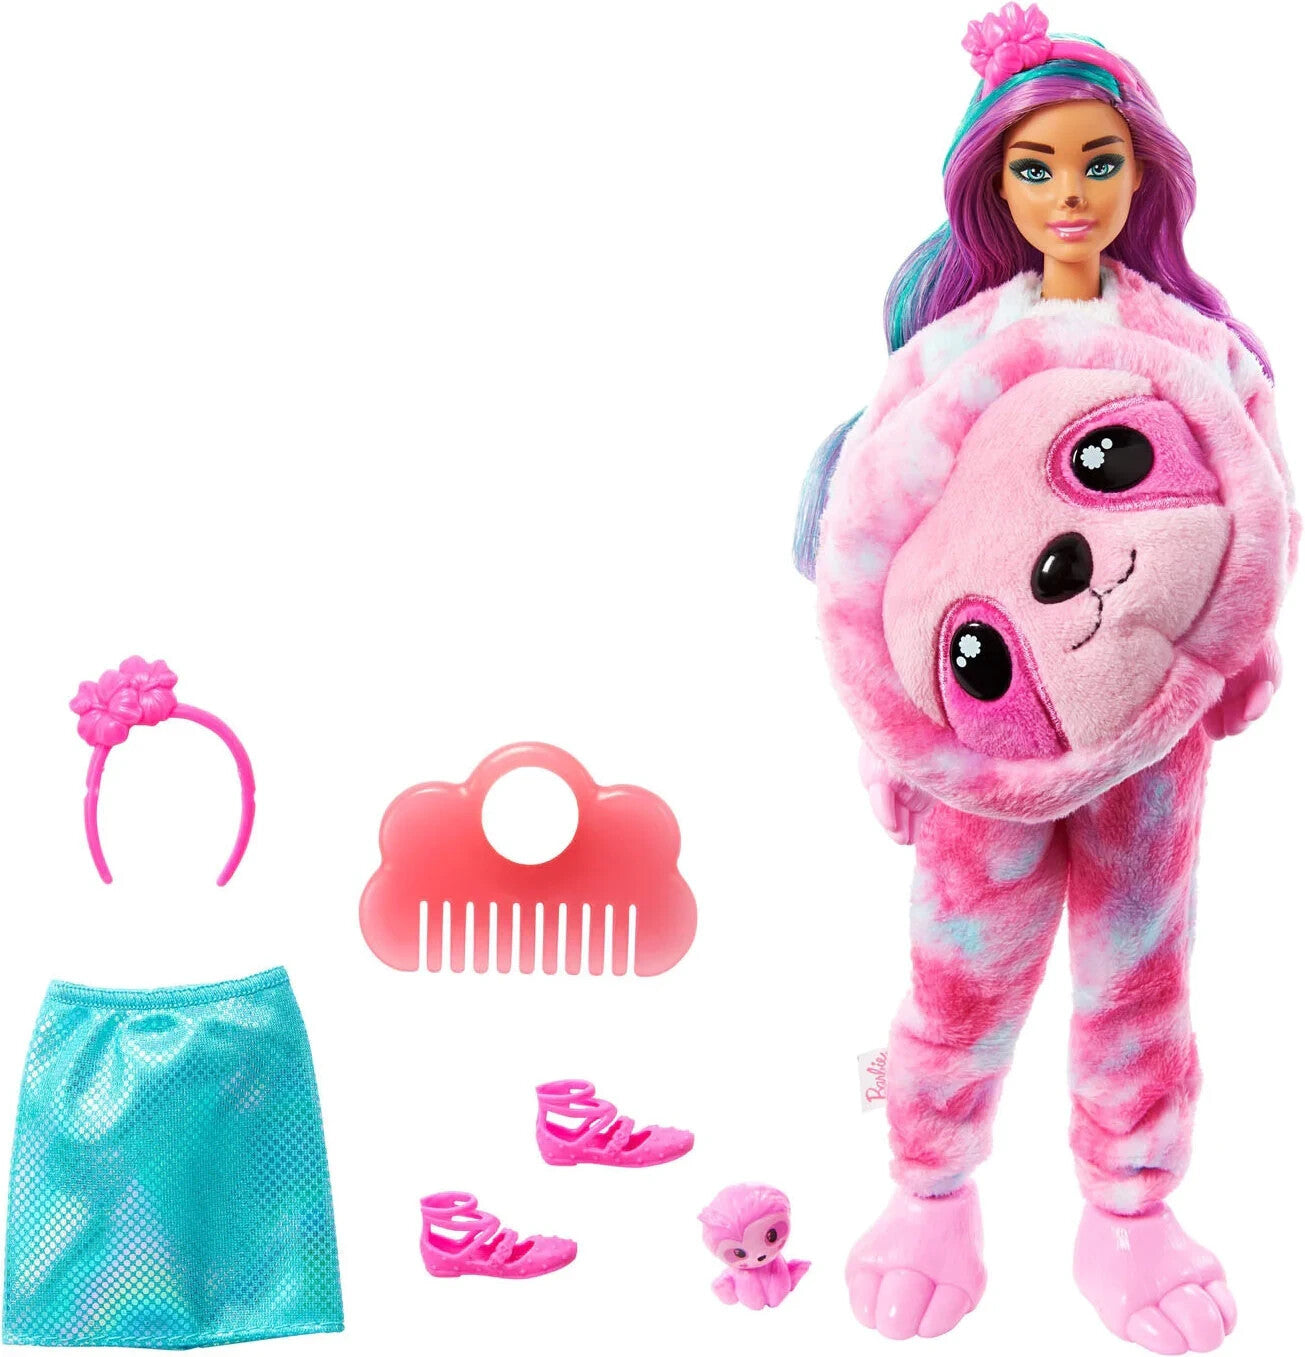 BARBIE Cutie Reveal Fantasy Doll with Sloth Plush Costume & 10 Surprises (HJL59)